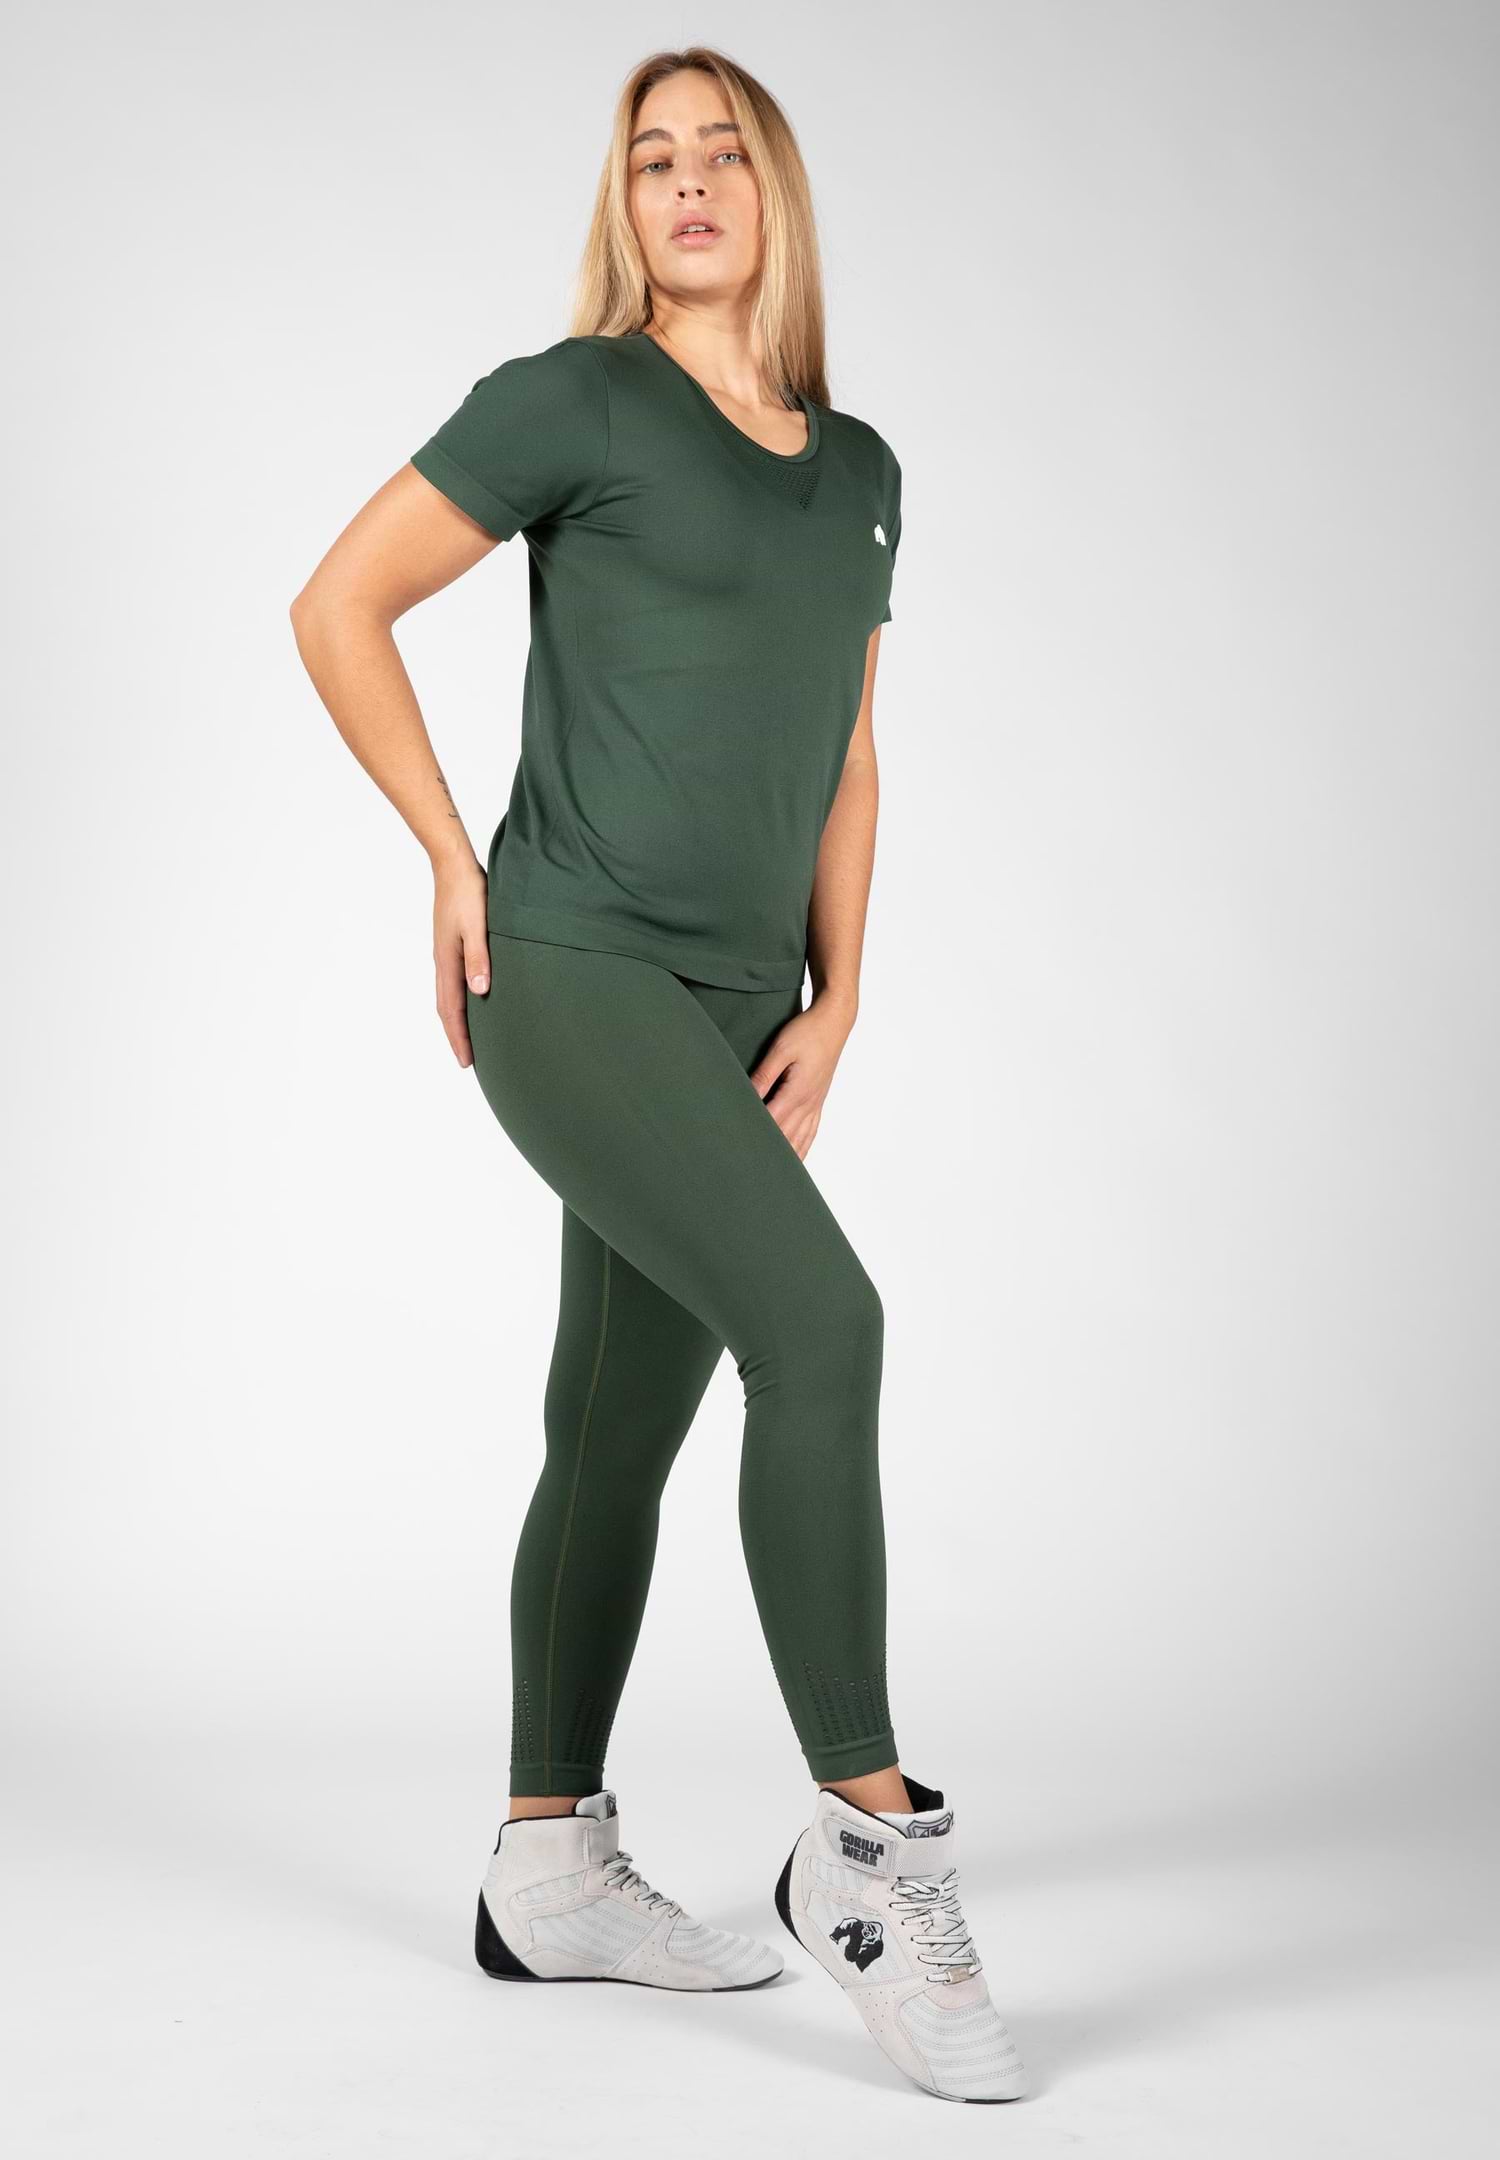 ADAGRO Womens Clothing Sets Solid Halter Top & Leggings (Color